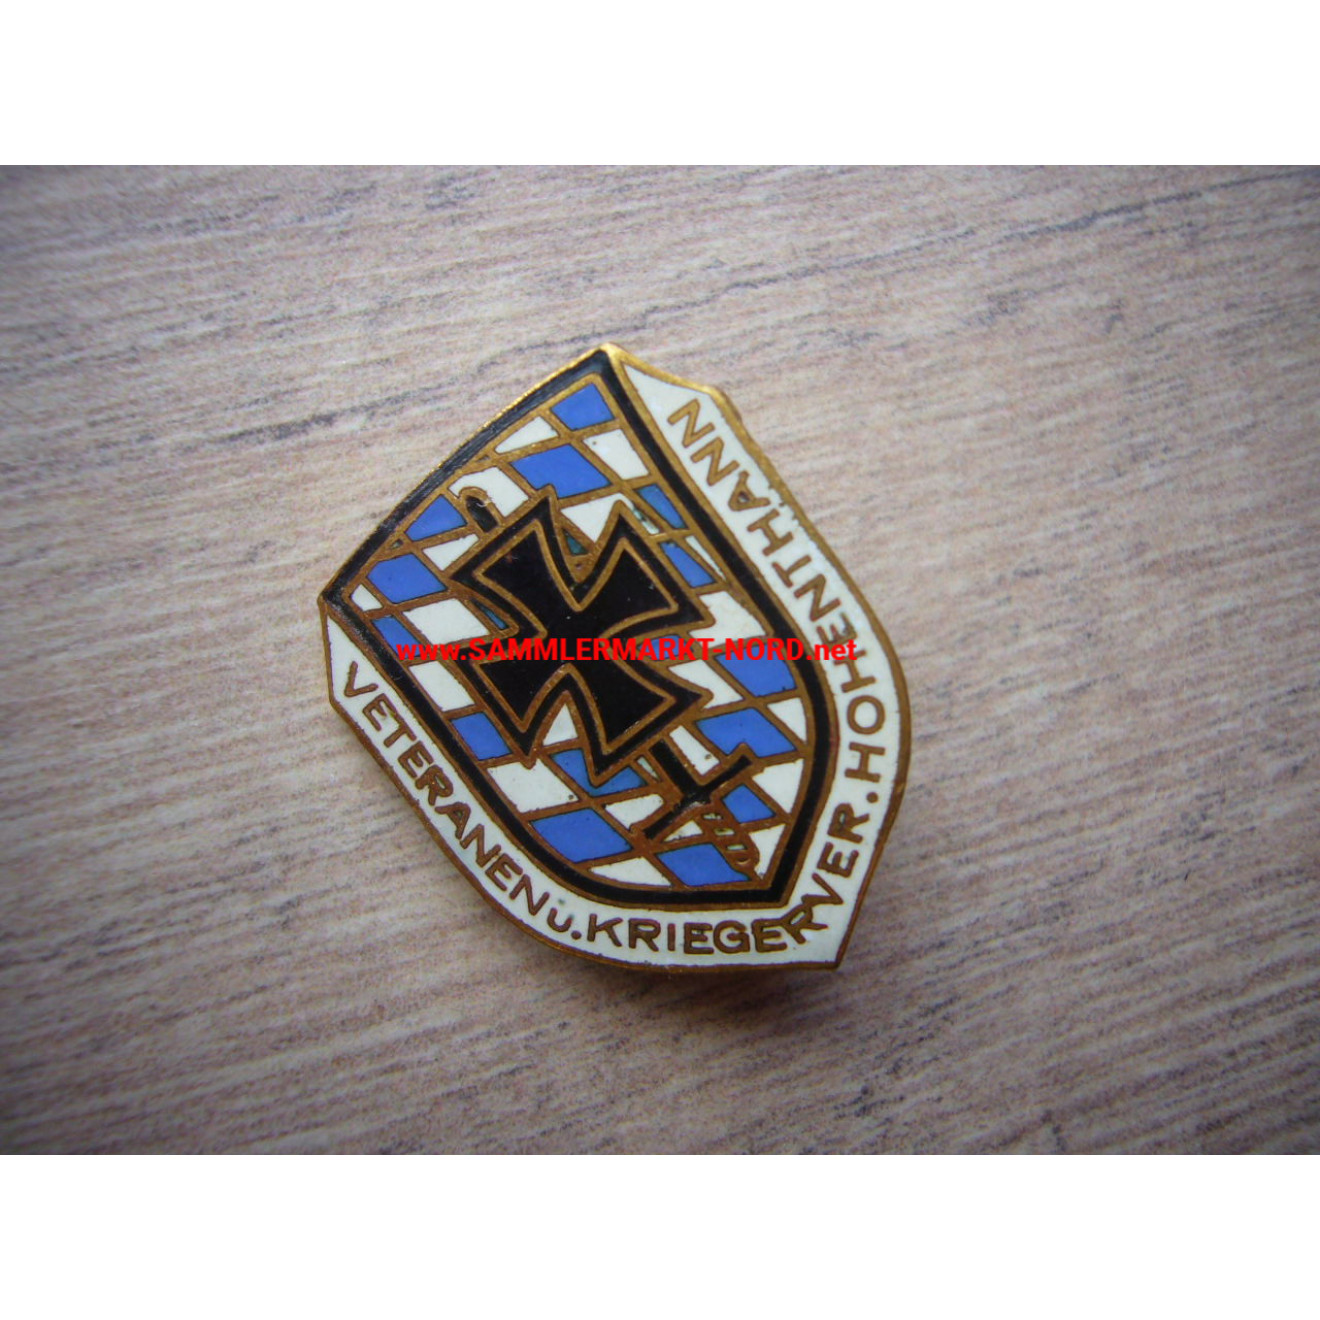 Veterans and warriors association Hohenthann - membership badge